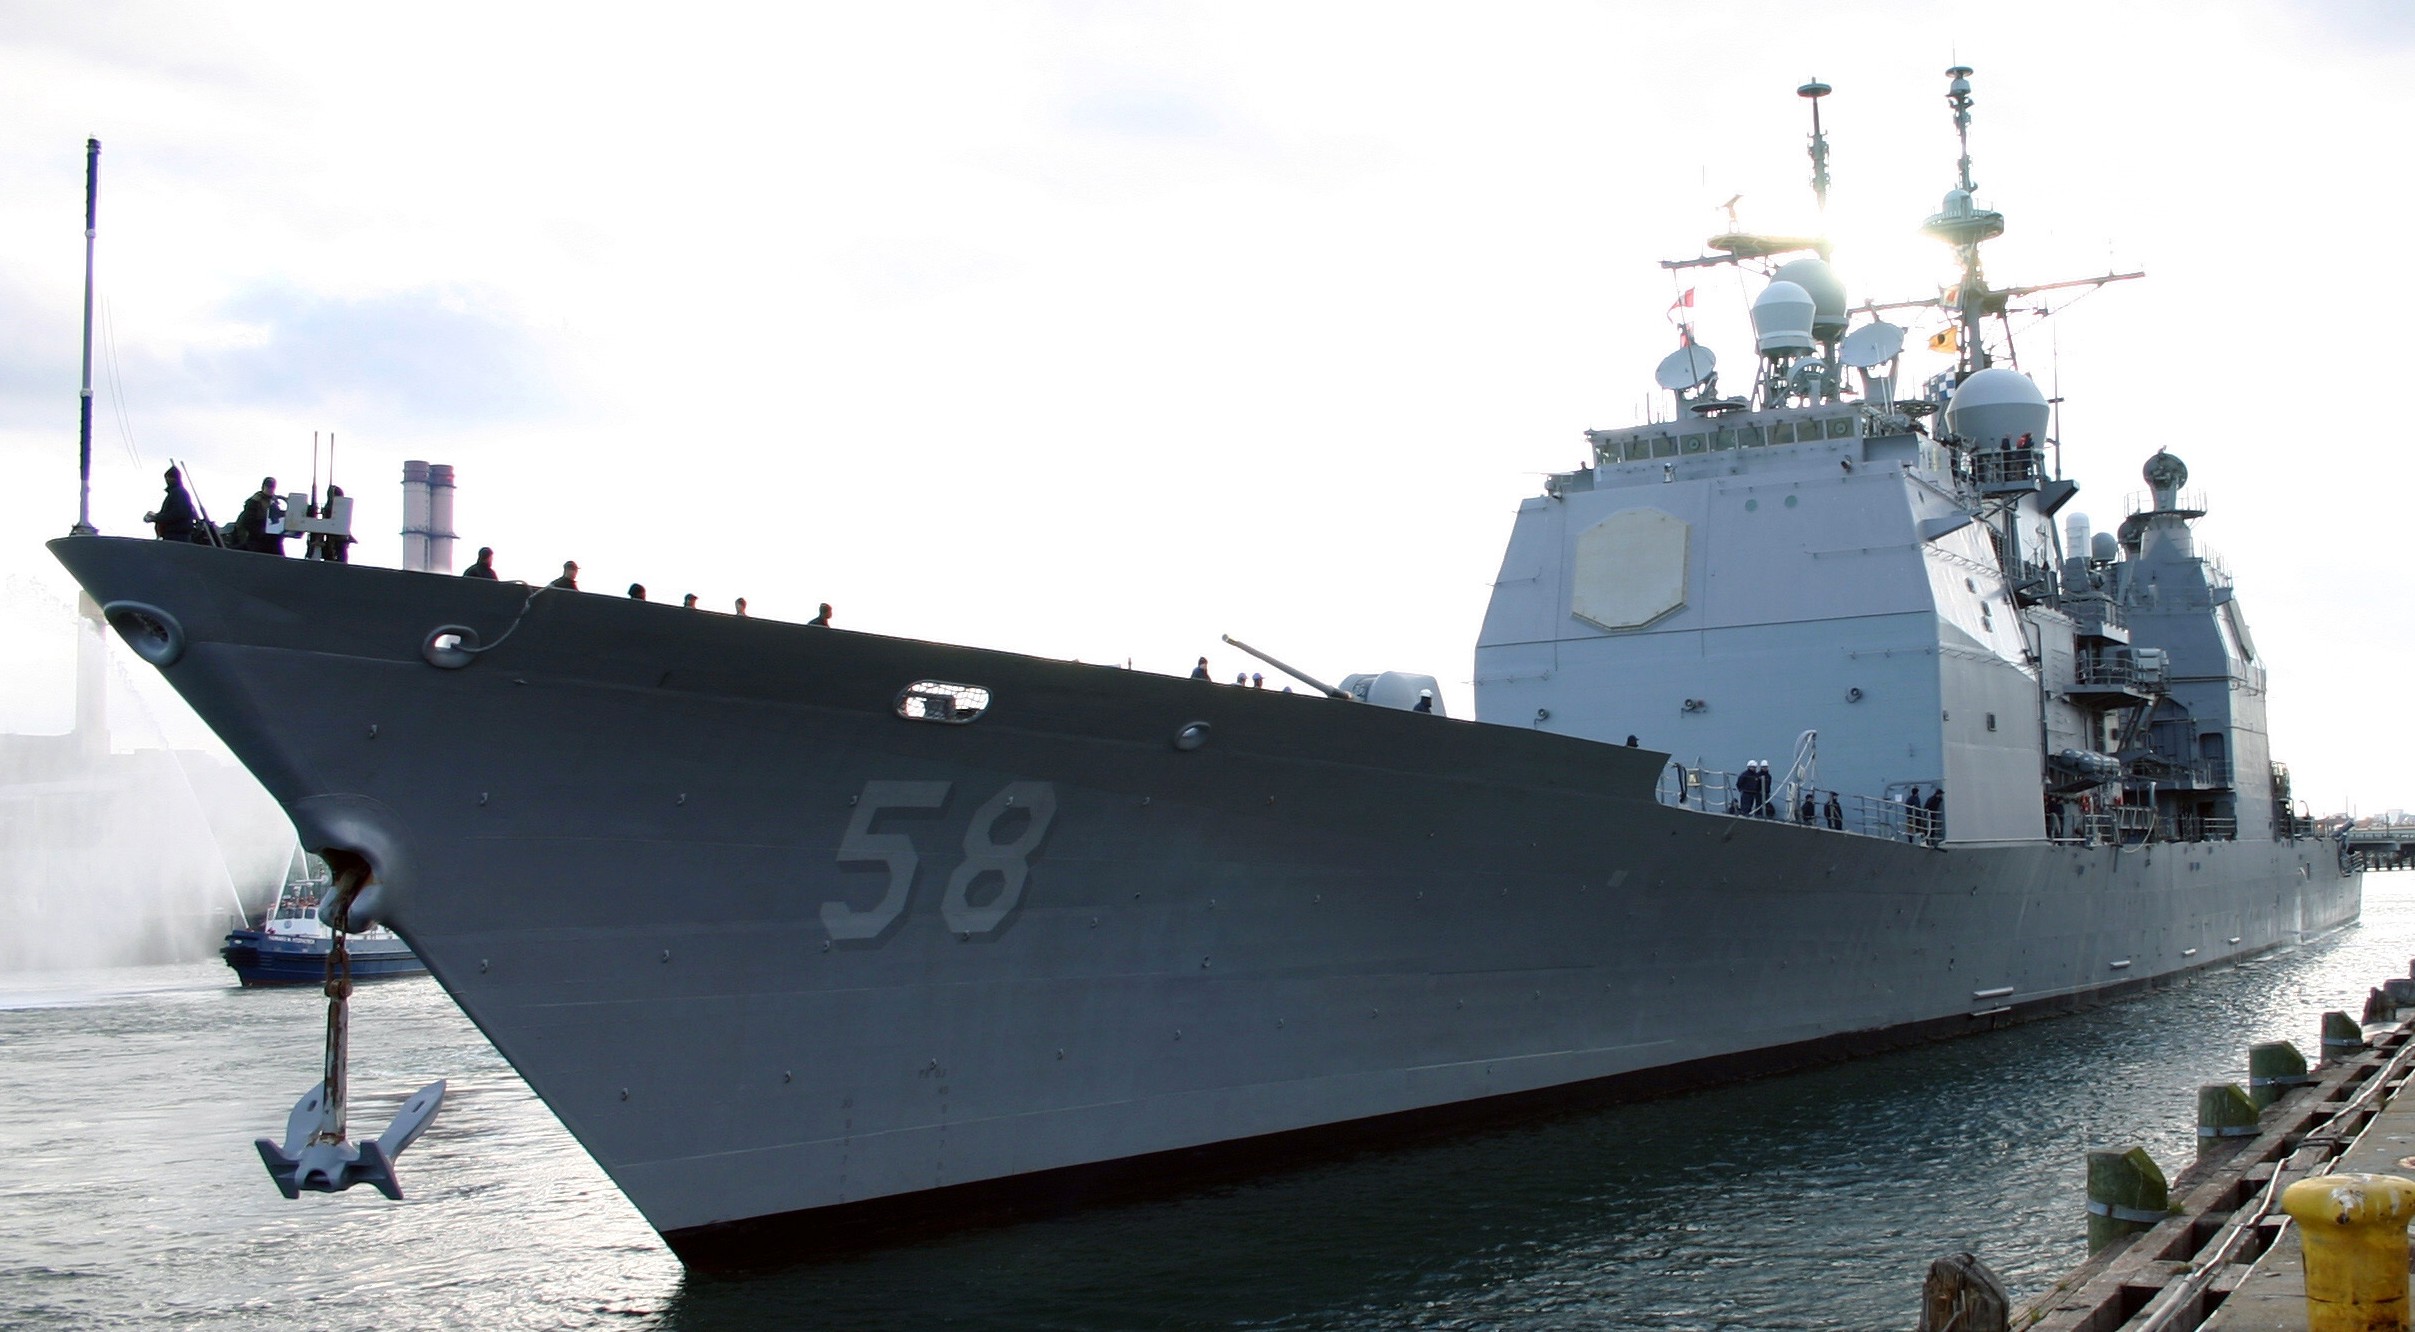 cg-58 uss philippine sea ticonderoga class guided missile cruiser aegis us navy boston massachusetts 15